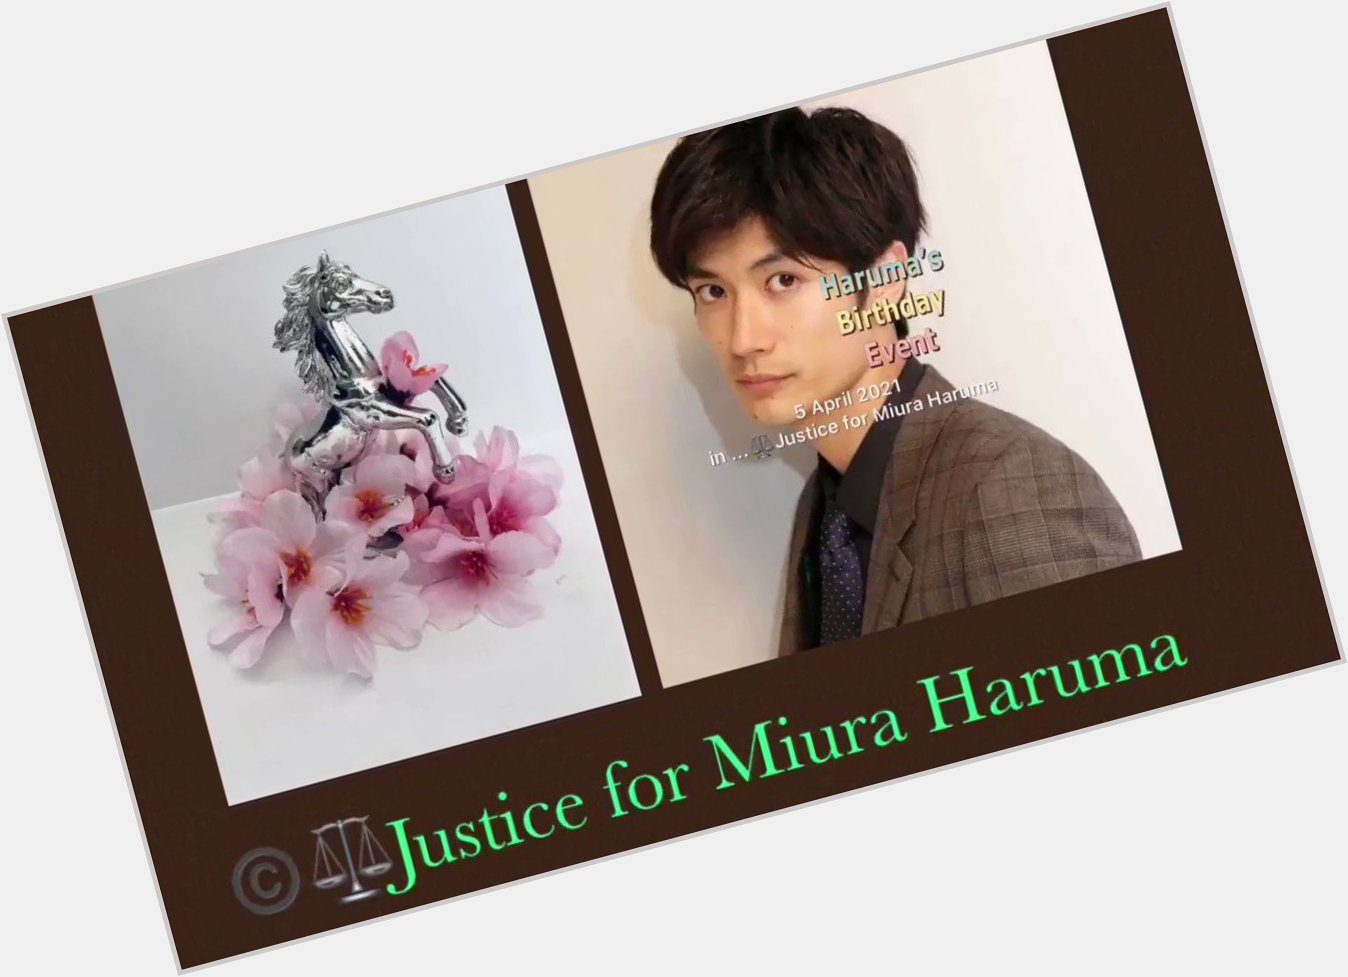   Happy Birthday Haruma   ©   Justice for Miura Haruma    